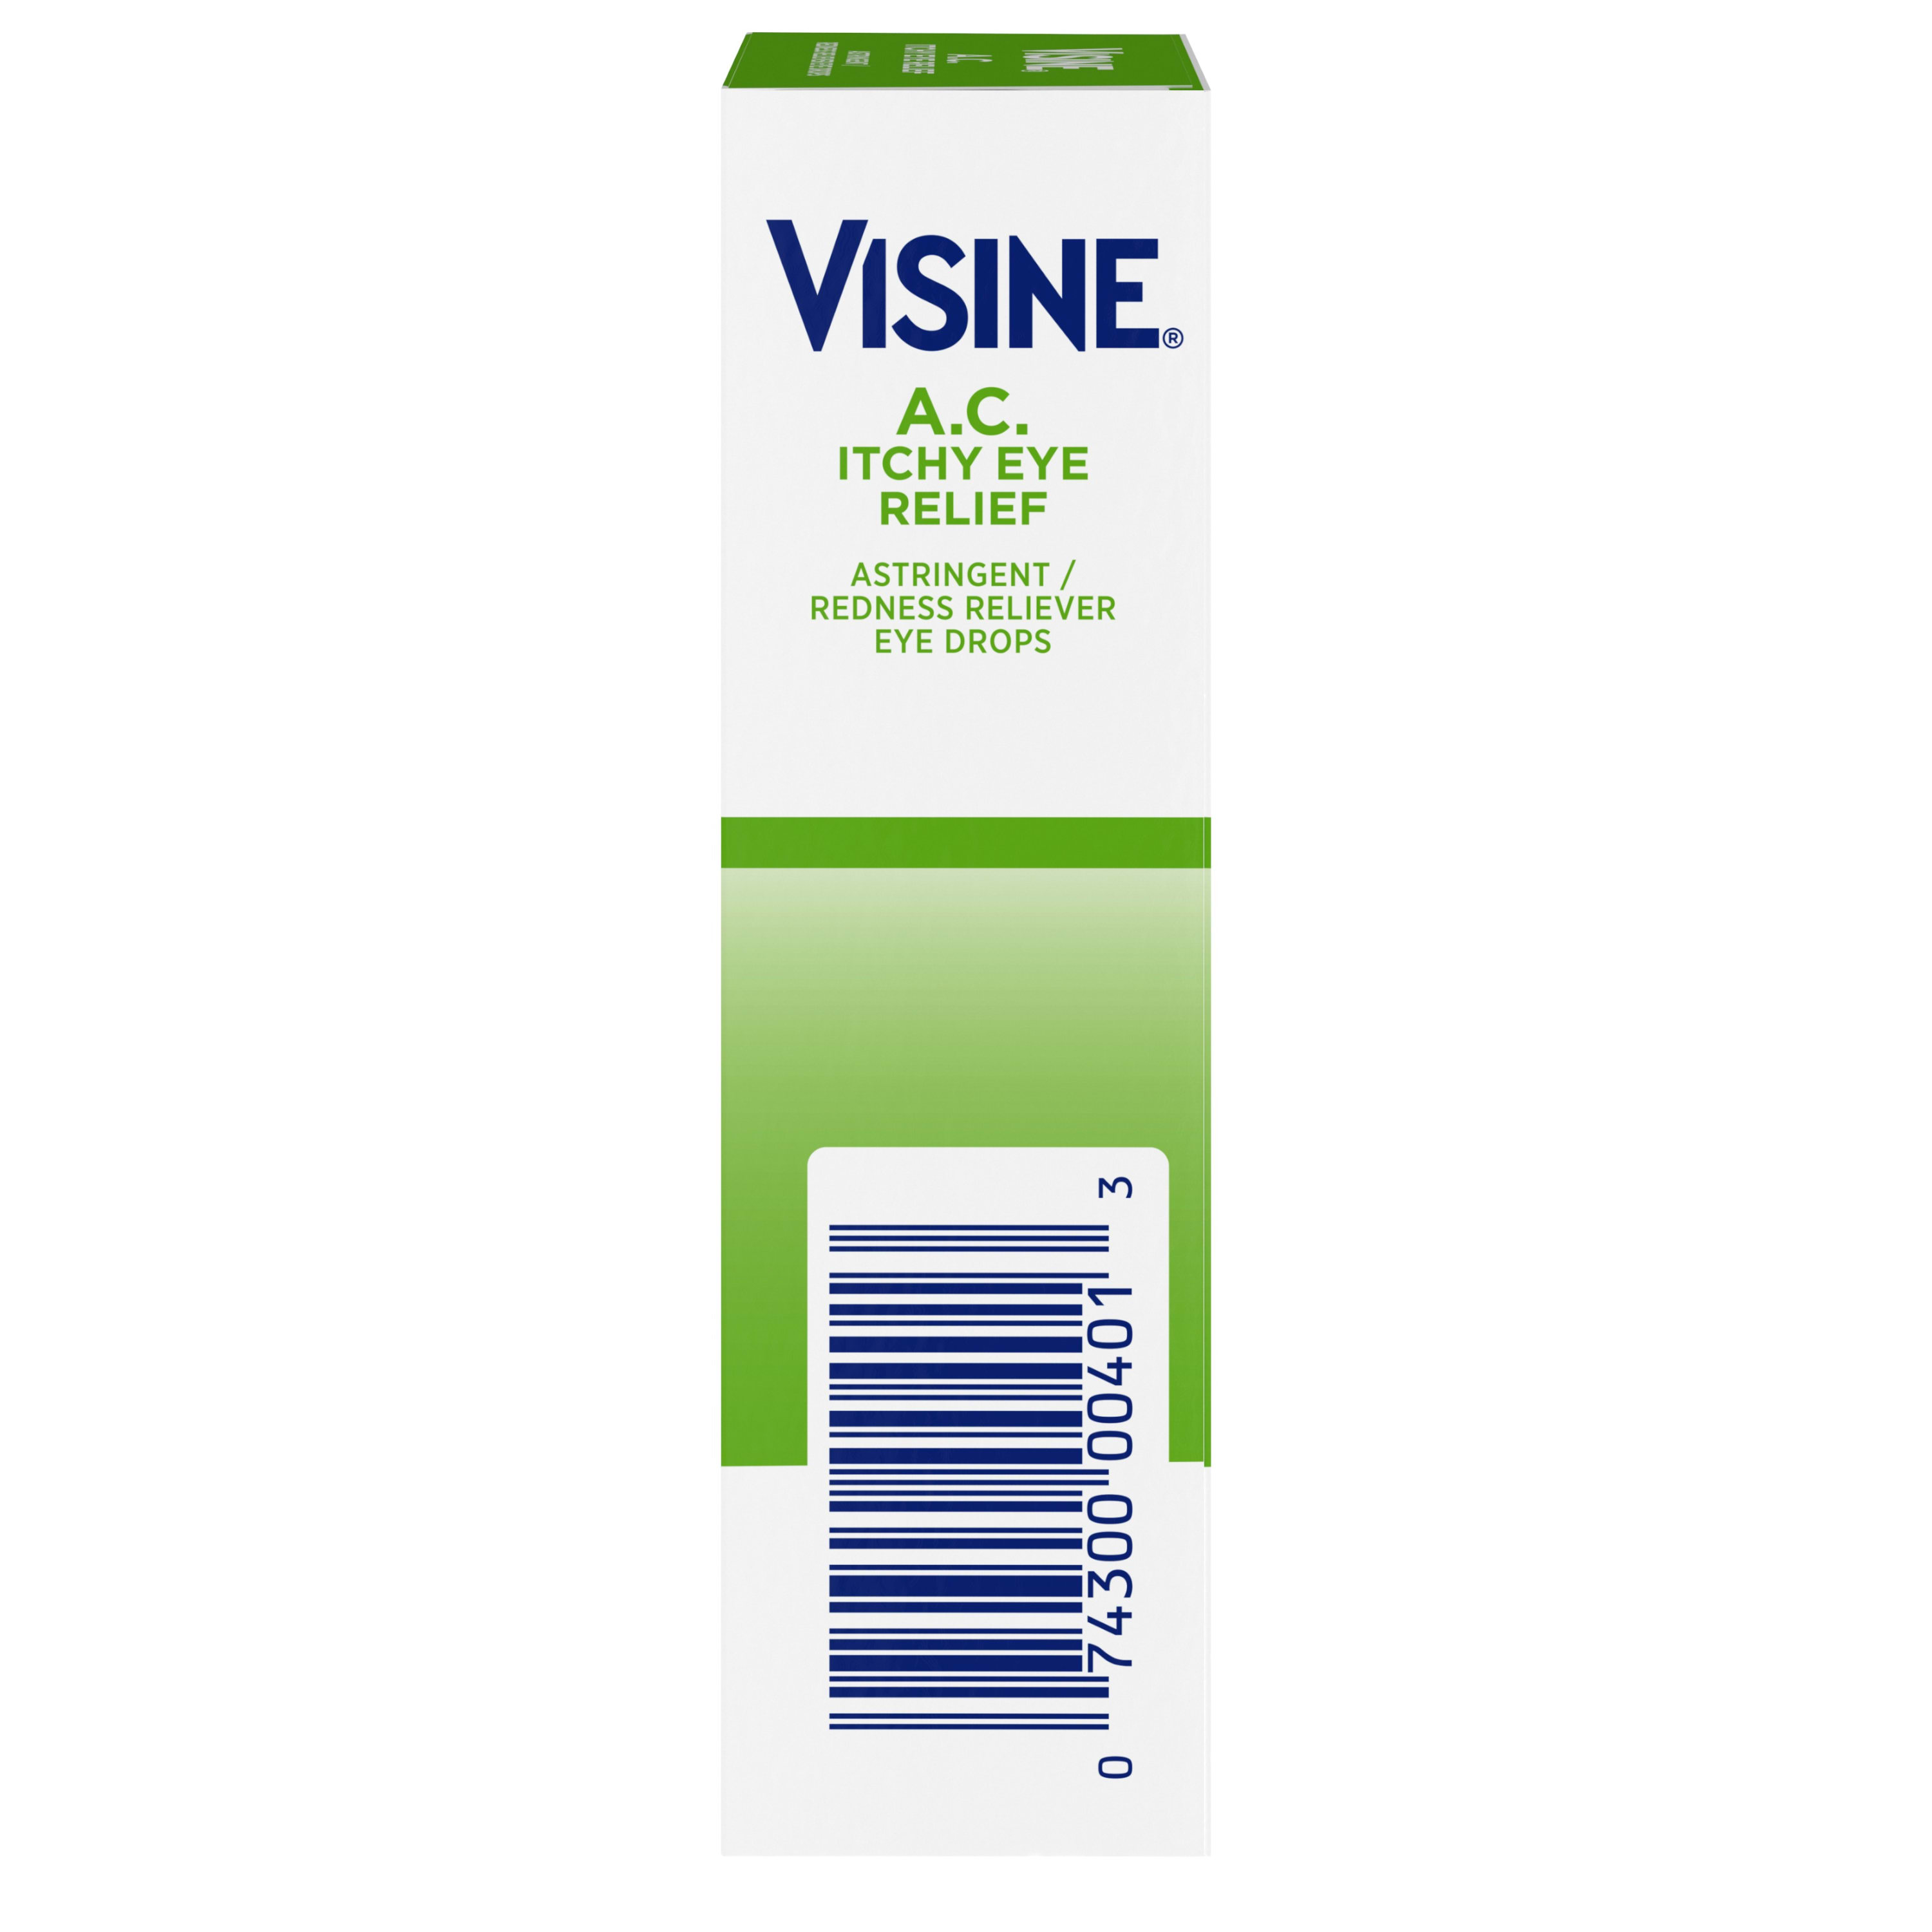 Visine A.C. Itchy Eye Relief Eye Drops, 0.5 fl. oz - image 2 of 13